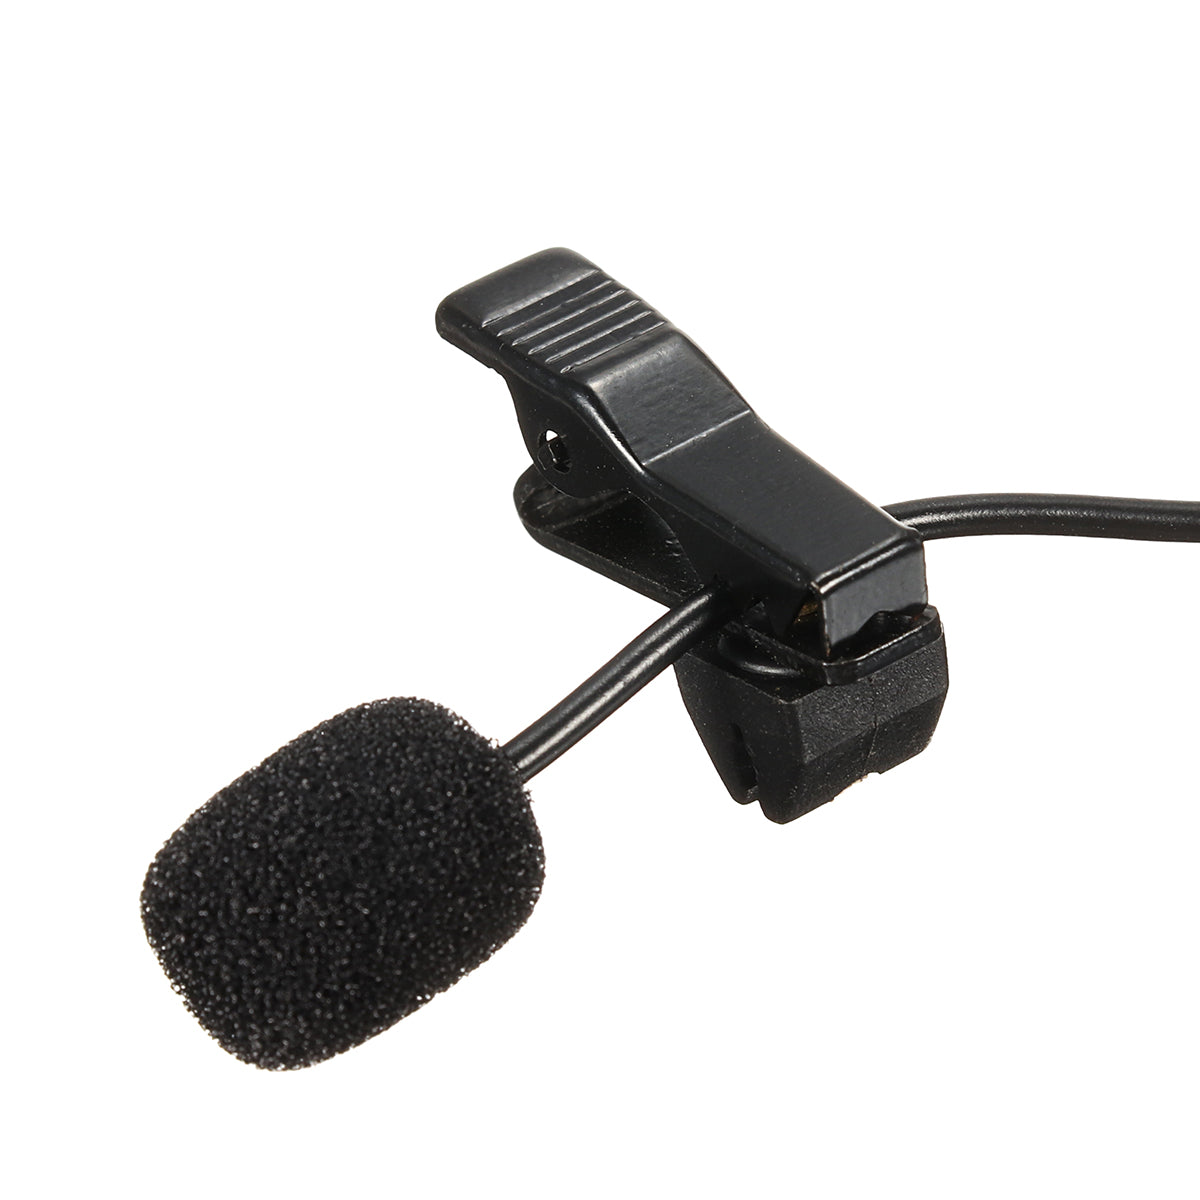 Tie Clip Lapel Wireless Lavalier Microphone Mic for Sennheiser EW100 EW300 EW500 G2 G3